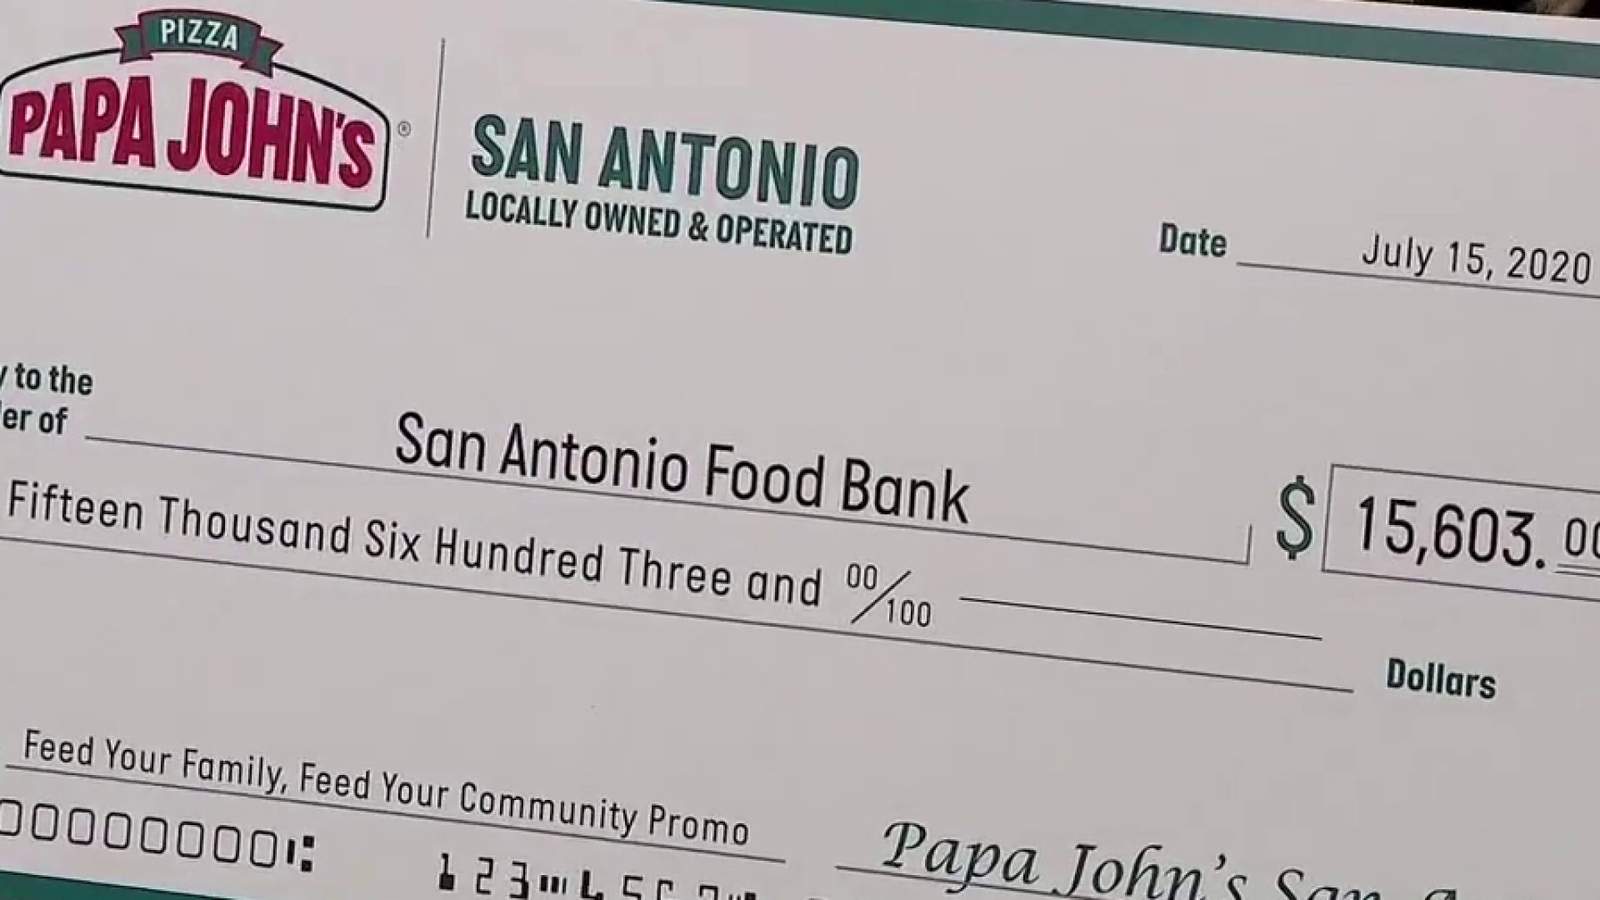 Papa Johns Pizza raises more than $15,000 for San Antonio Food Bank